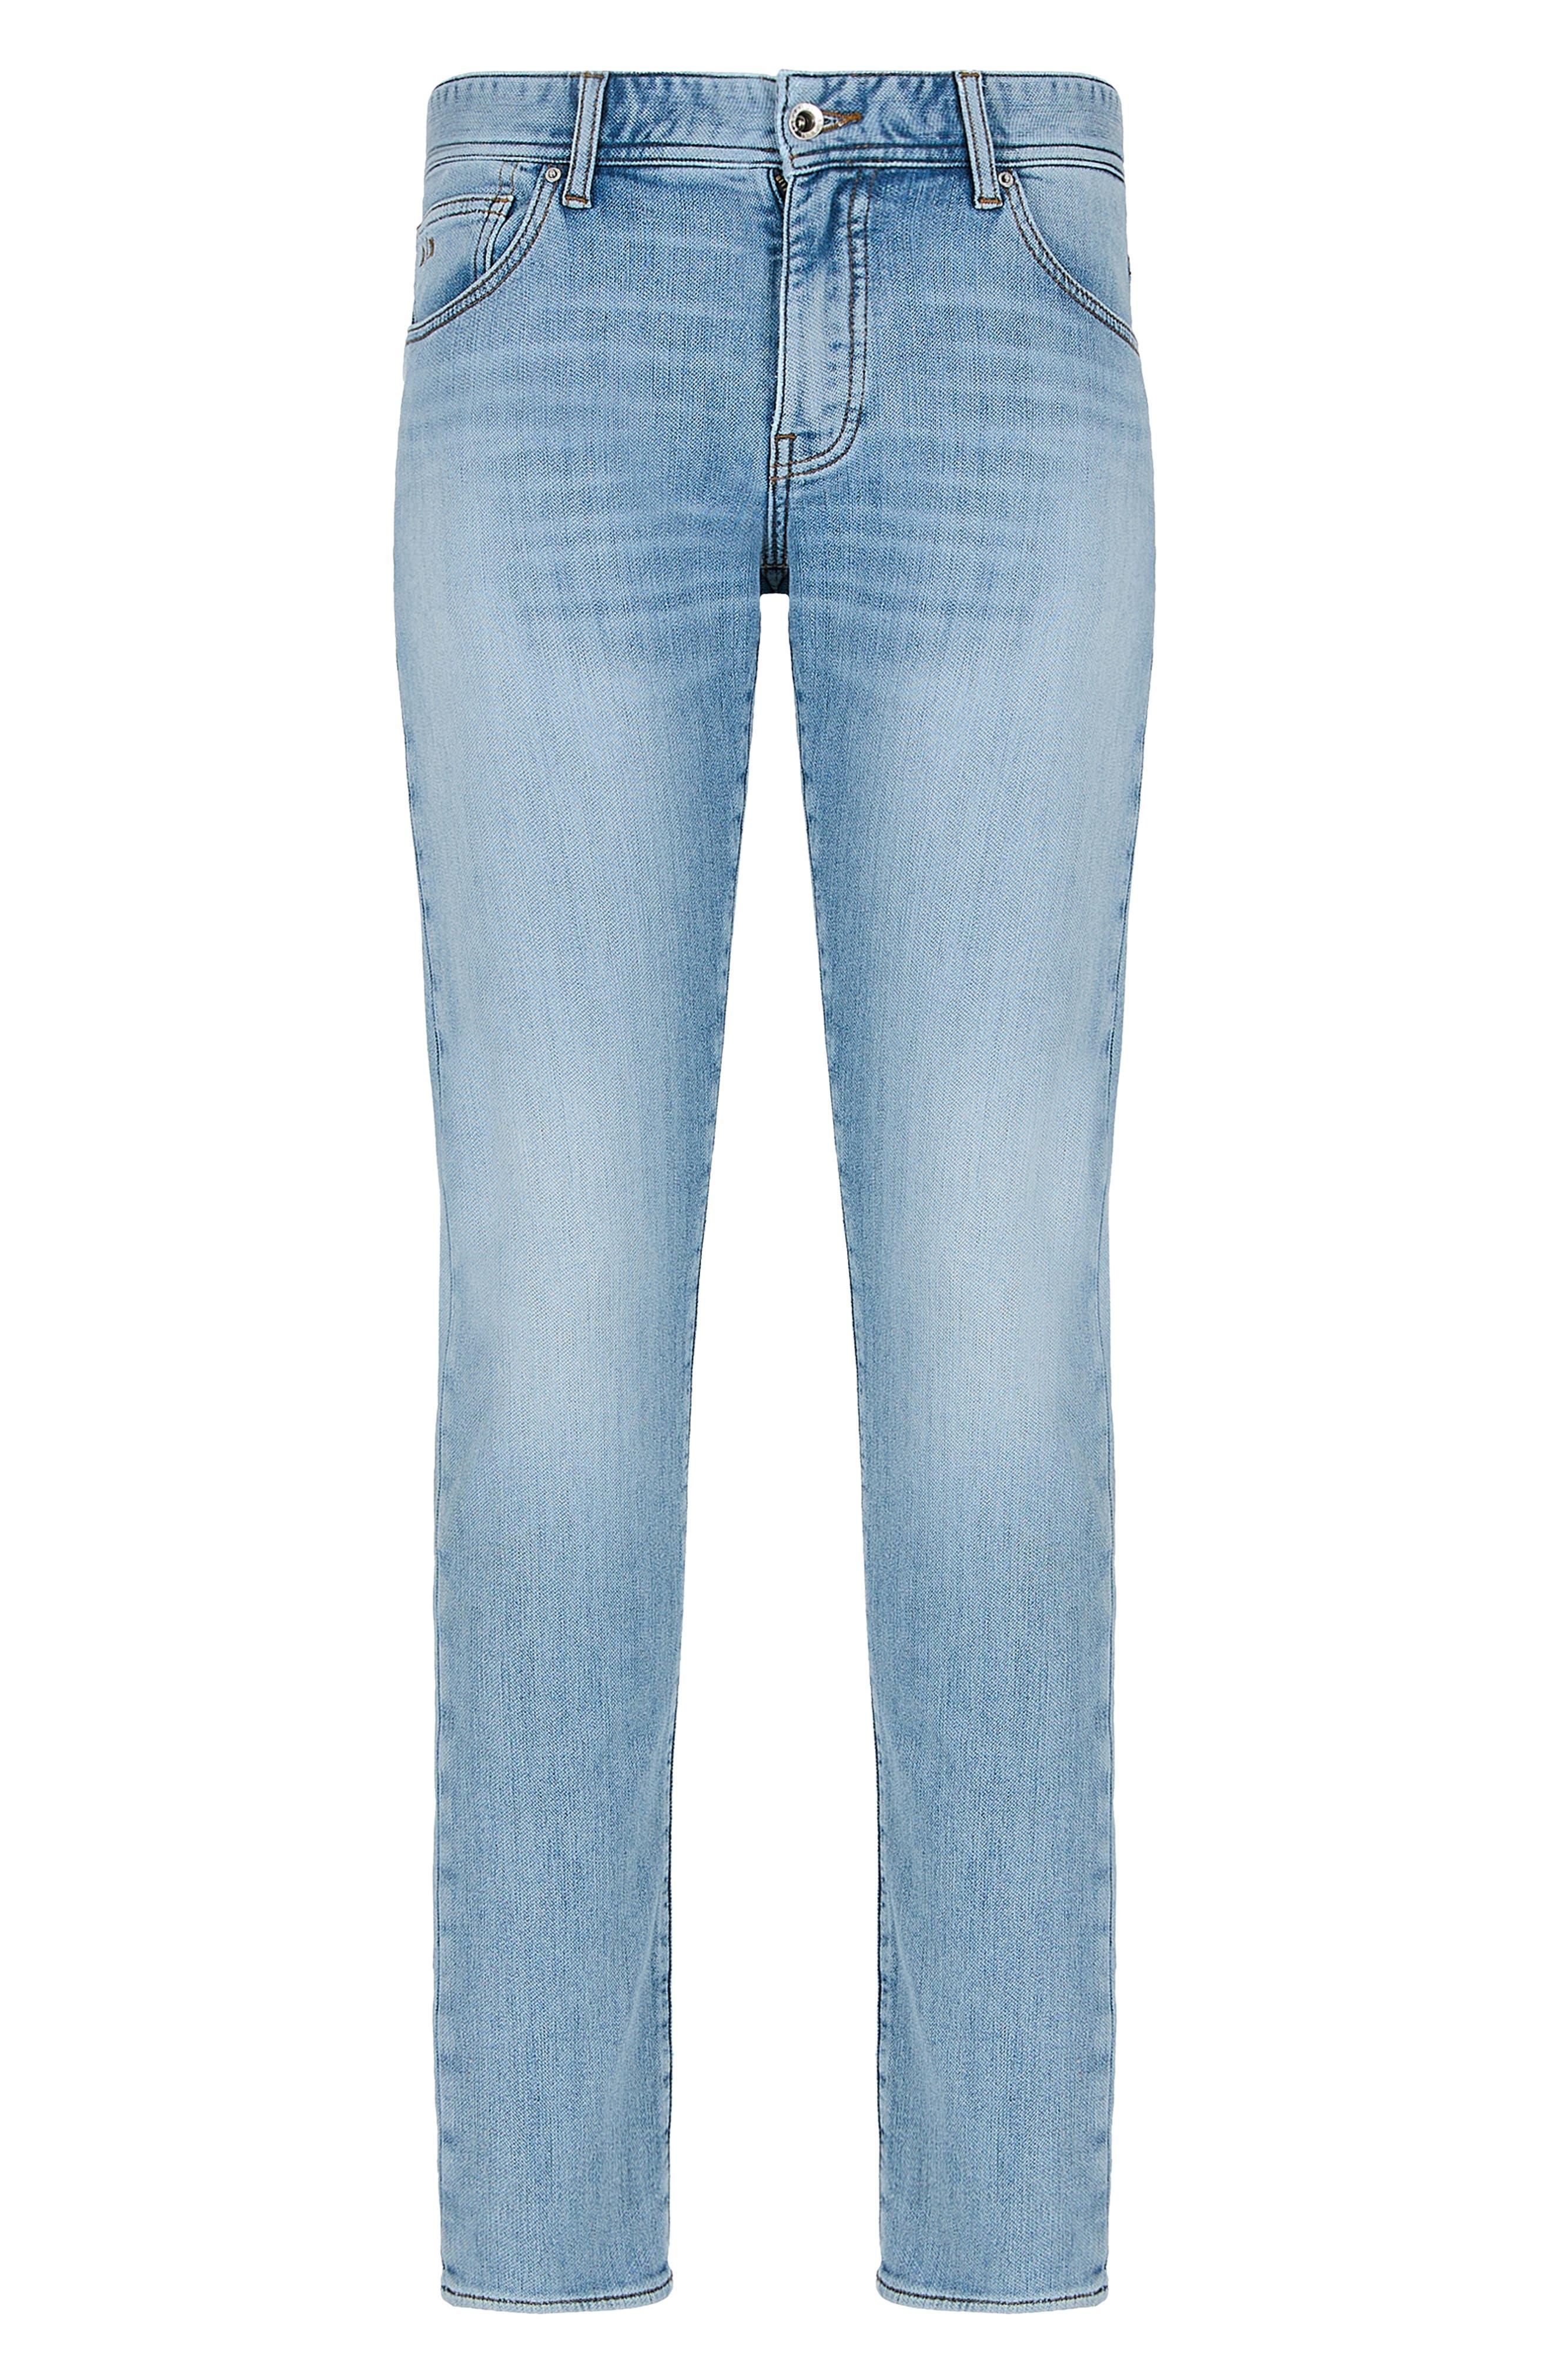 J33 super skinny stretch cotton denim jeans